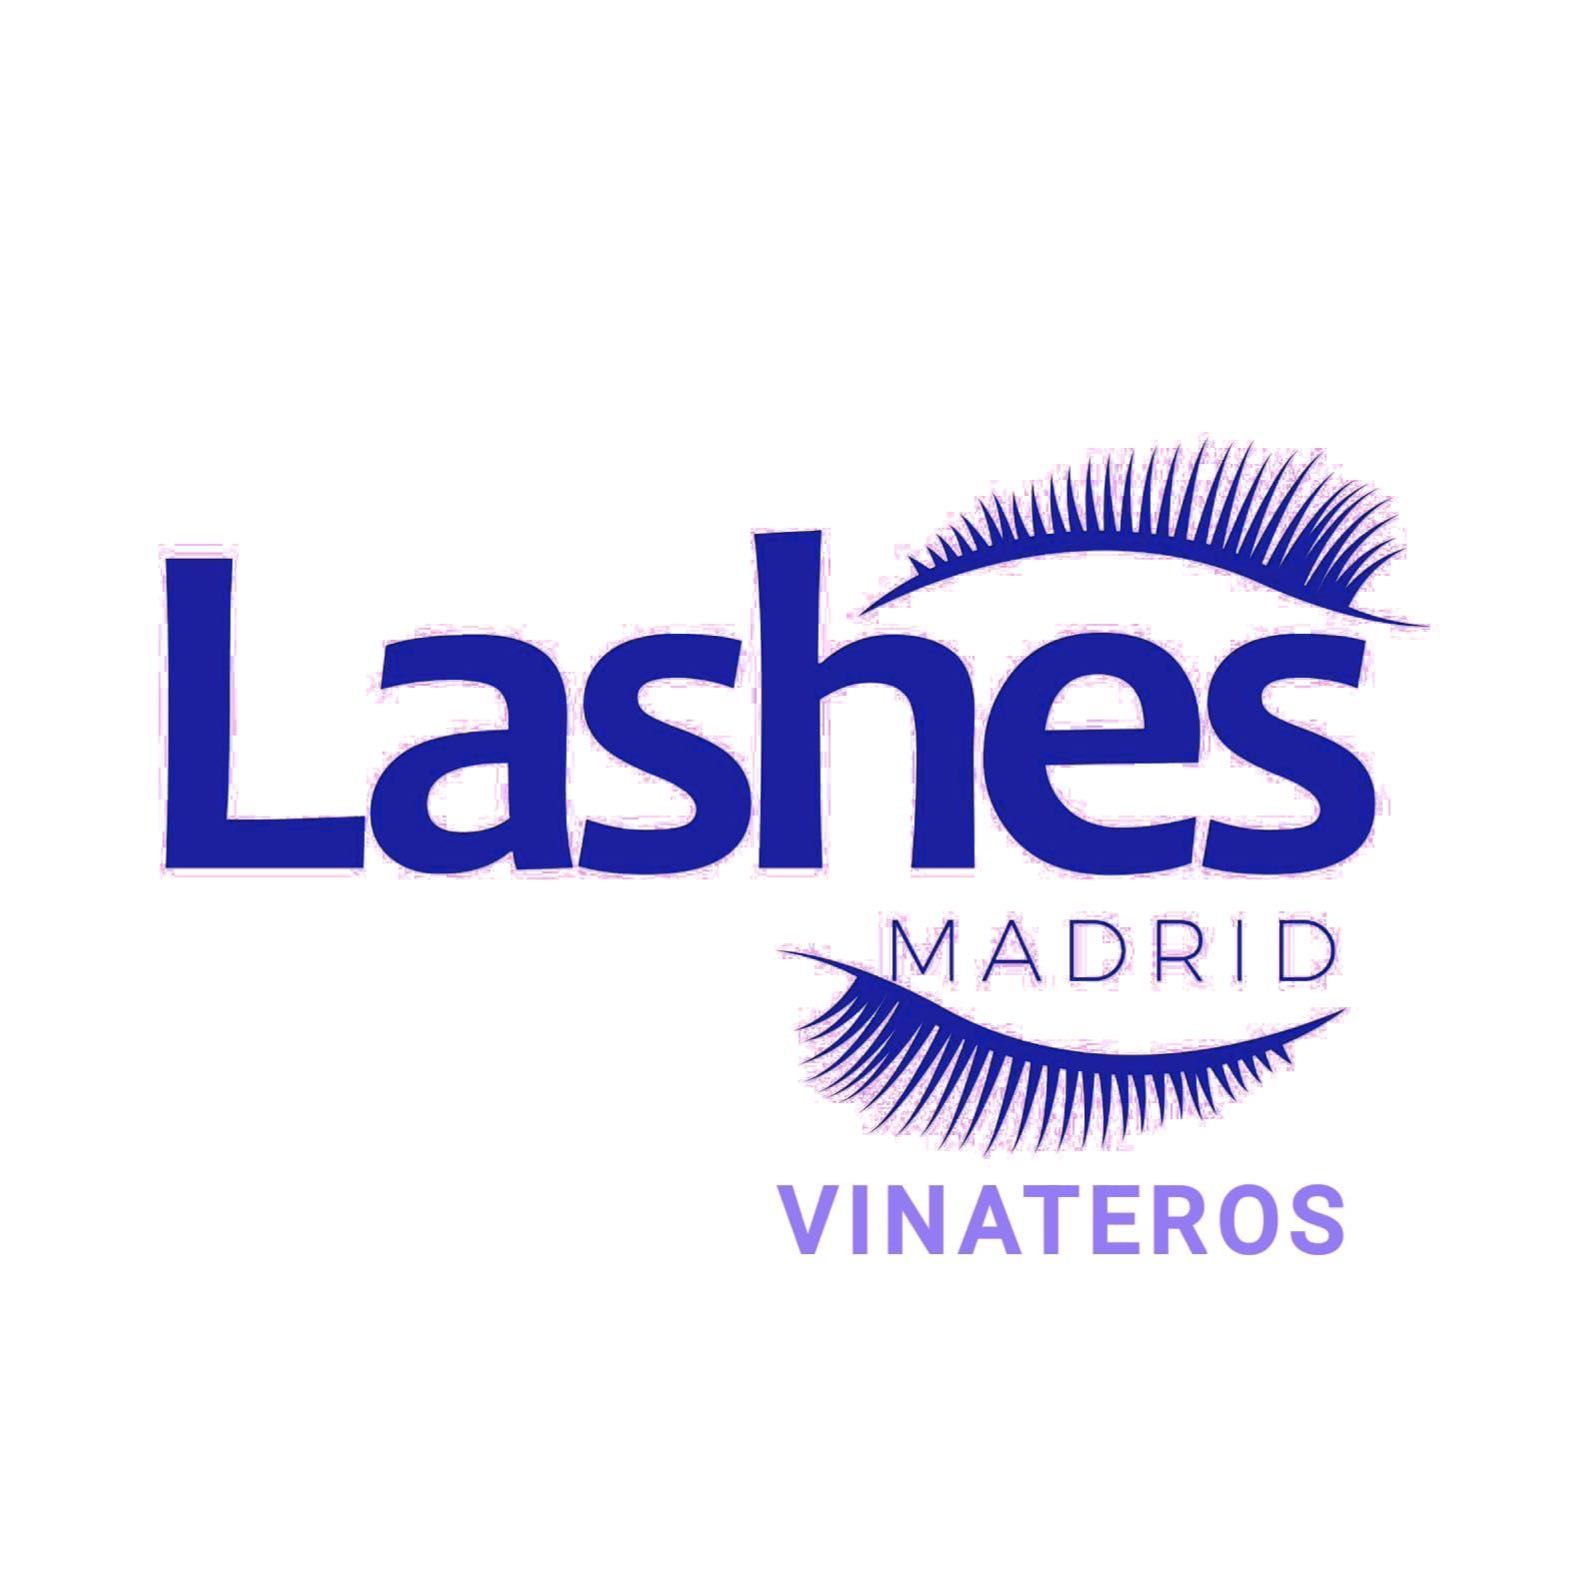 Lashes Madrid Vinateros, Calle del Camino de los Vinateros, 146, Local 98 Lashes Madrid, 28030, Madrid